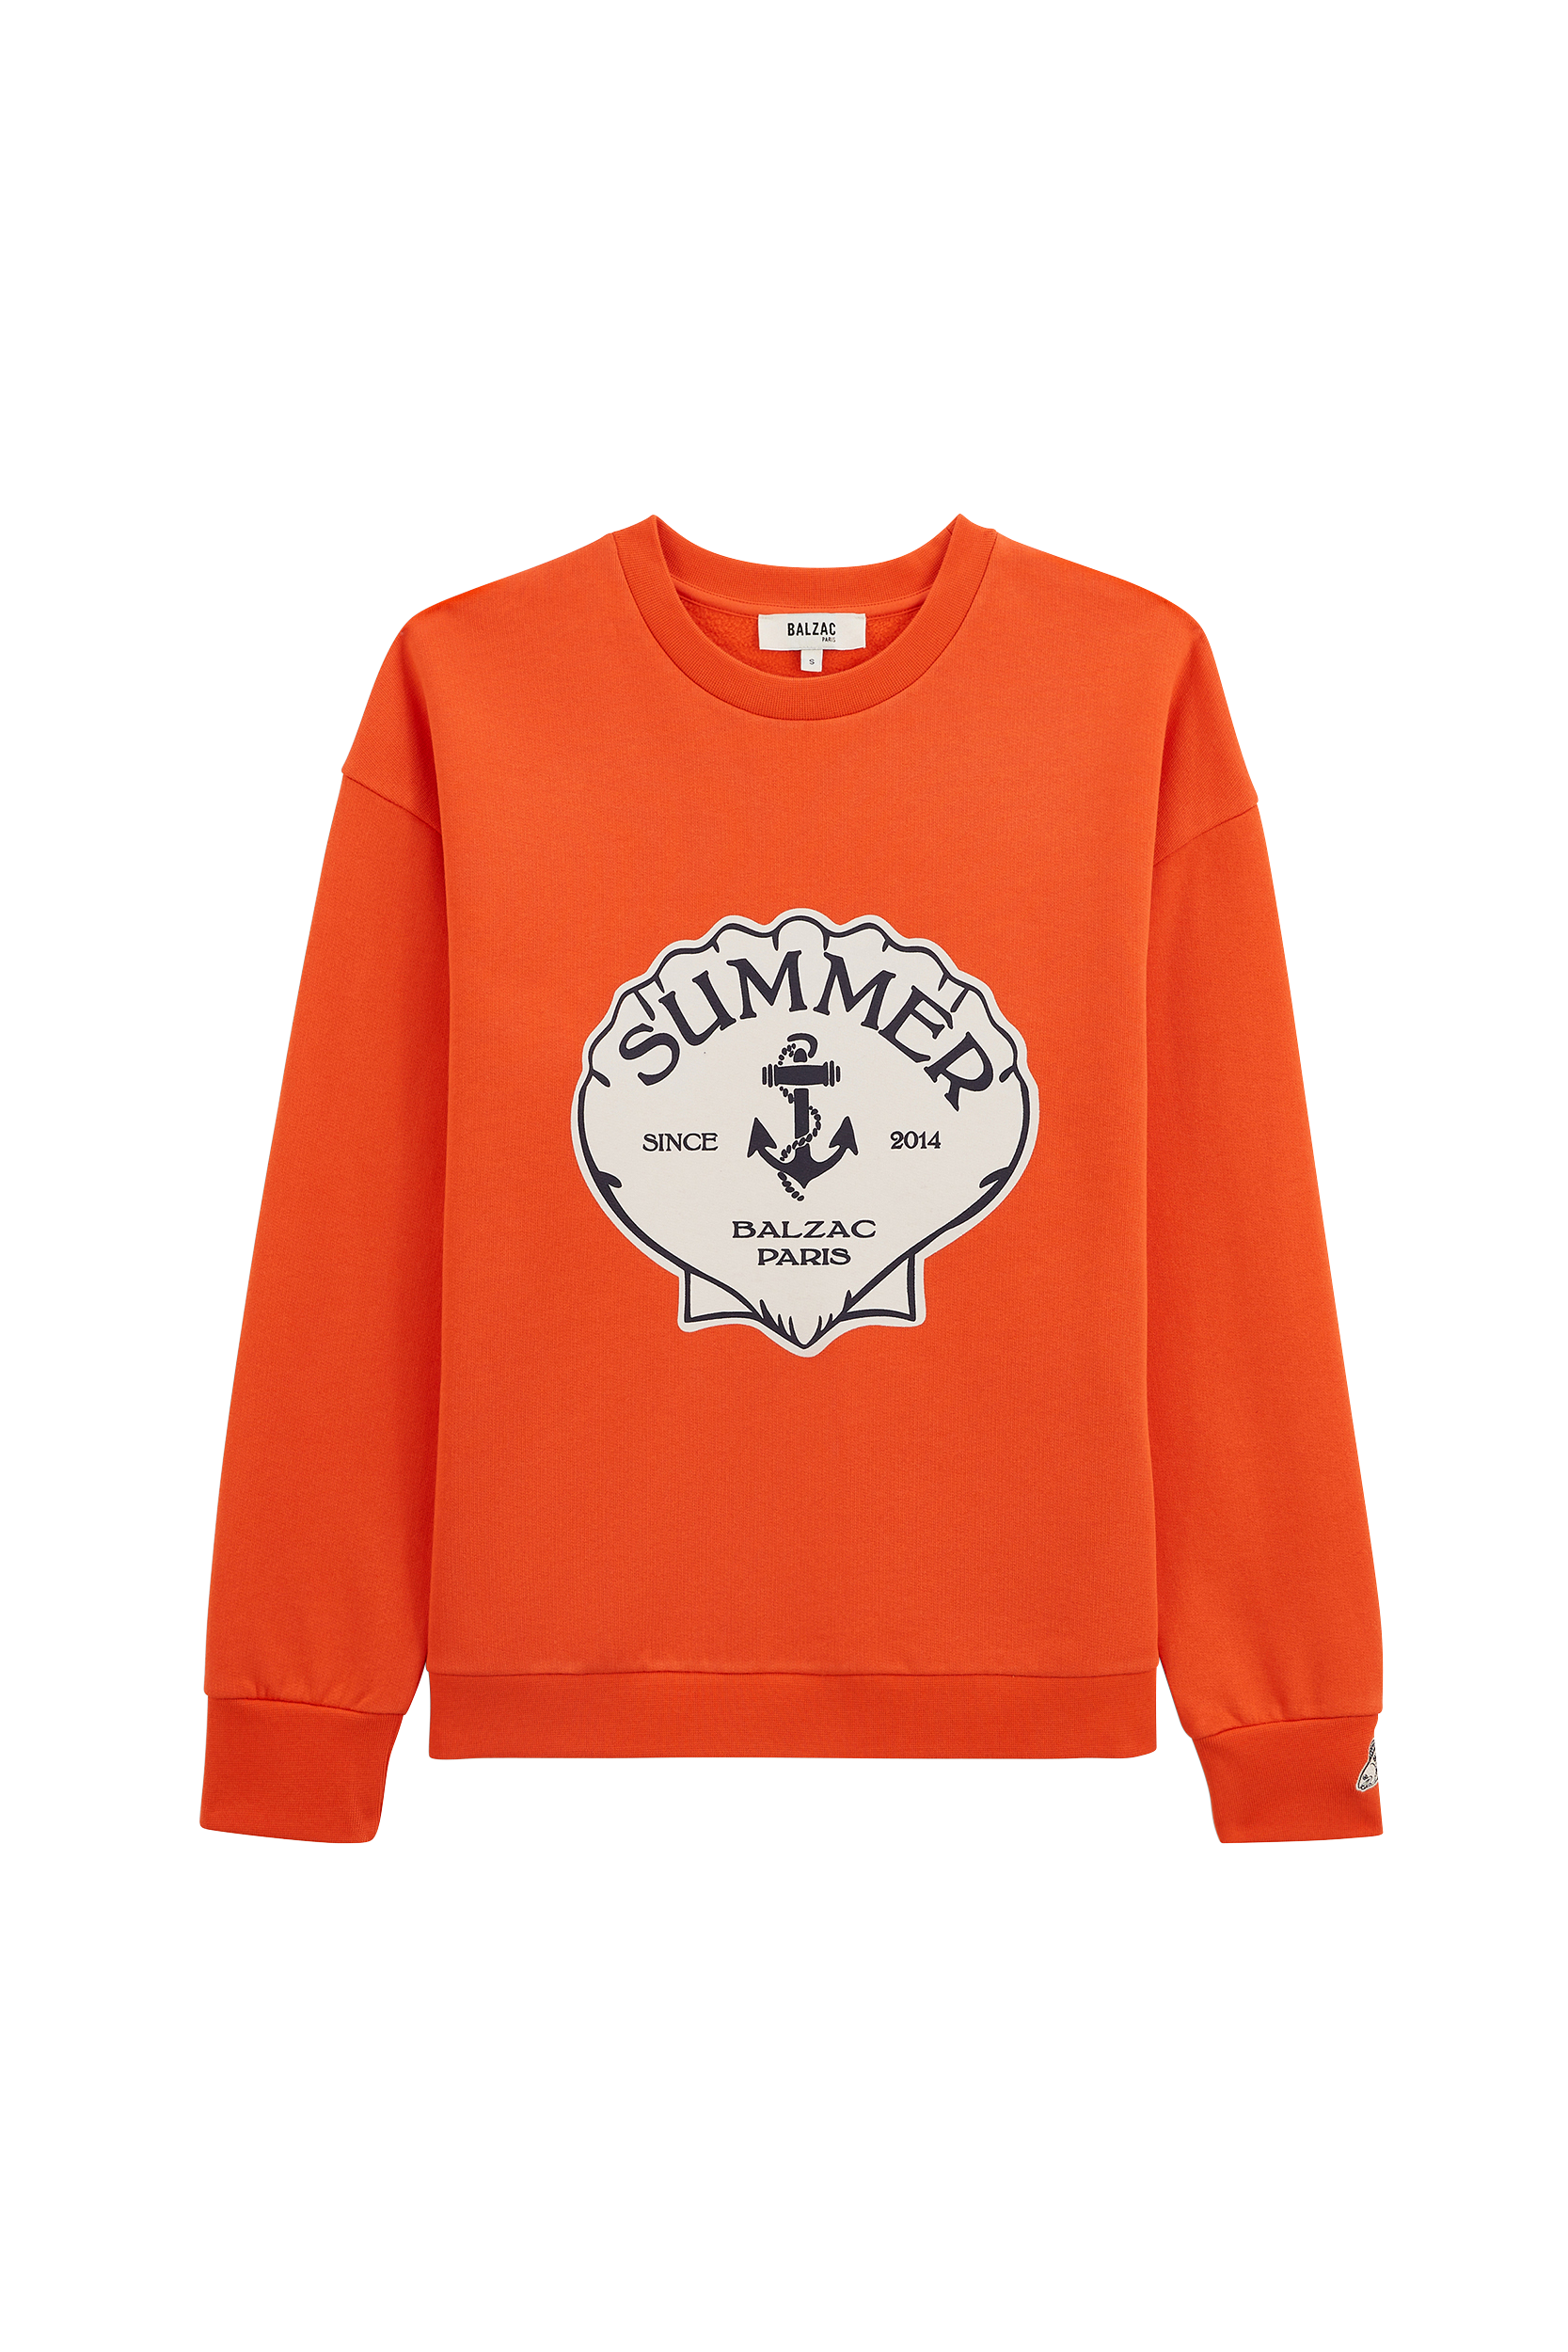 Harlow BP loves Surfrider sweatshirt orange